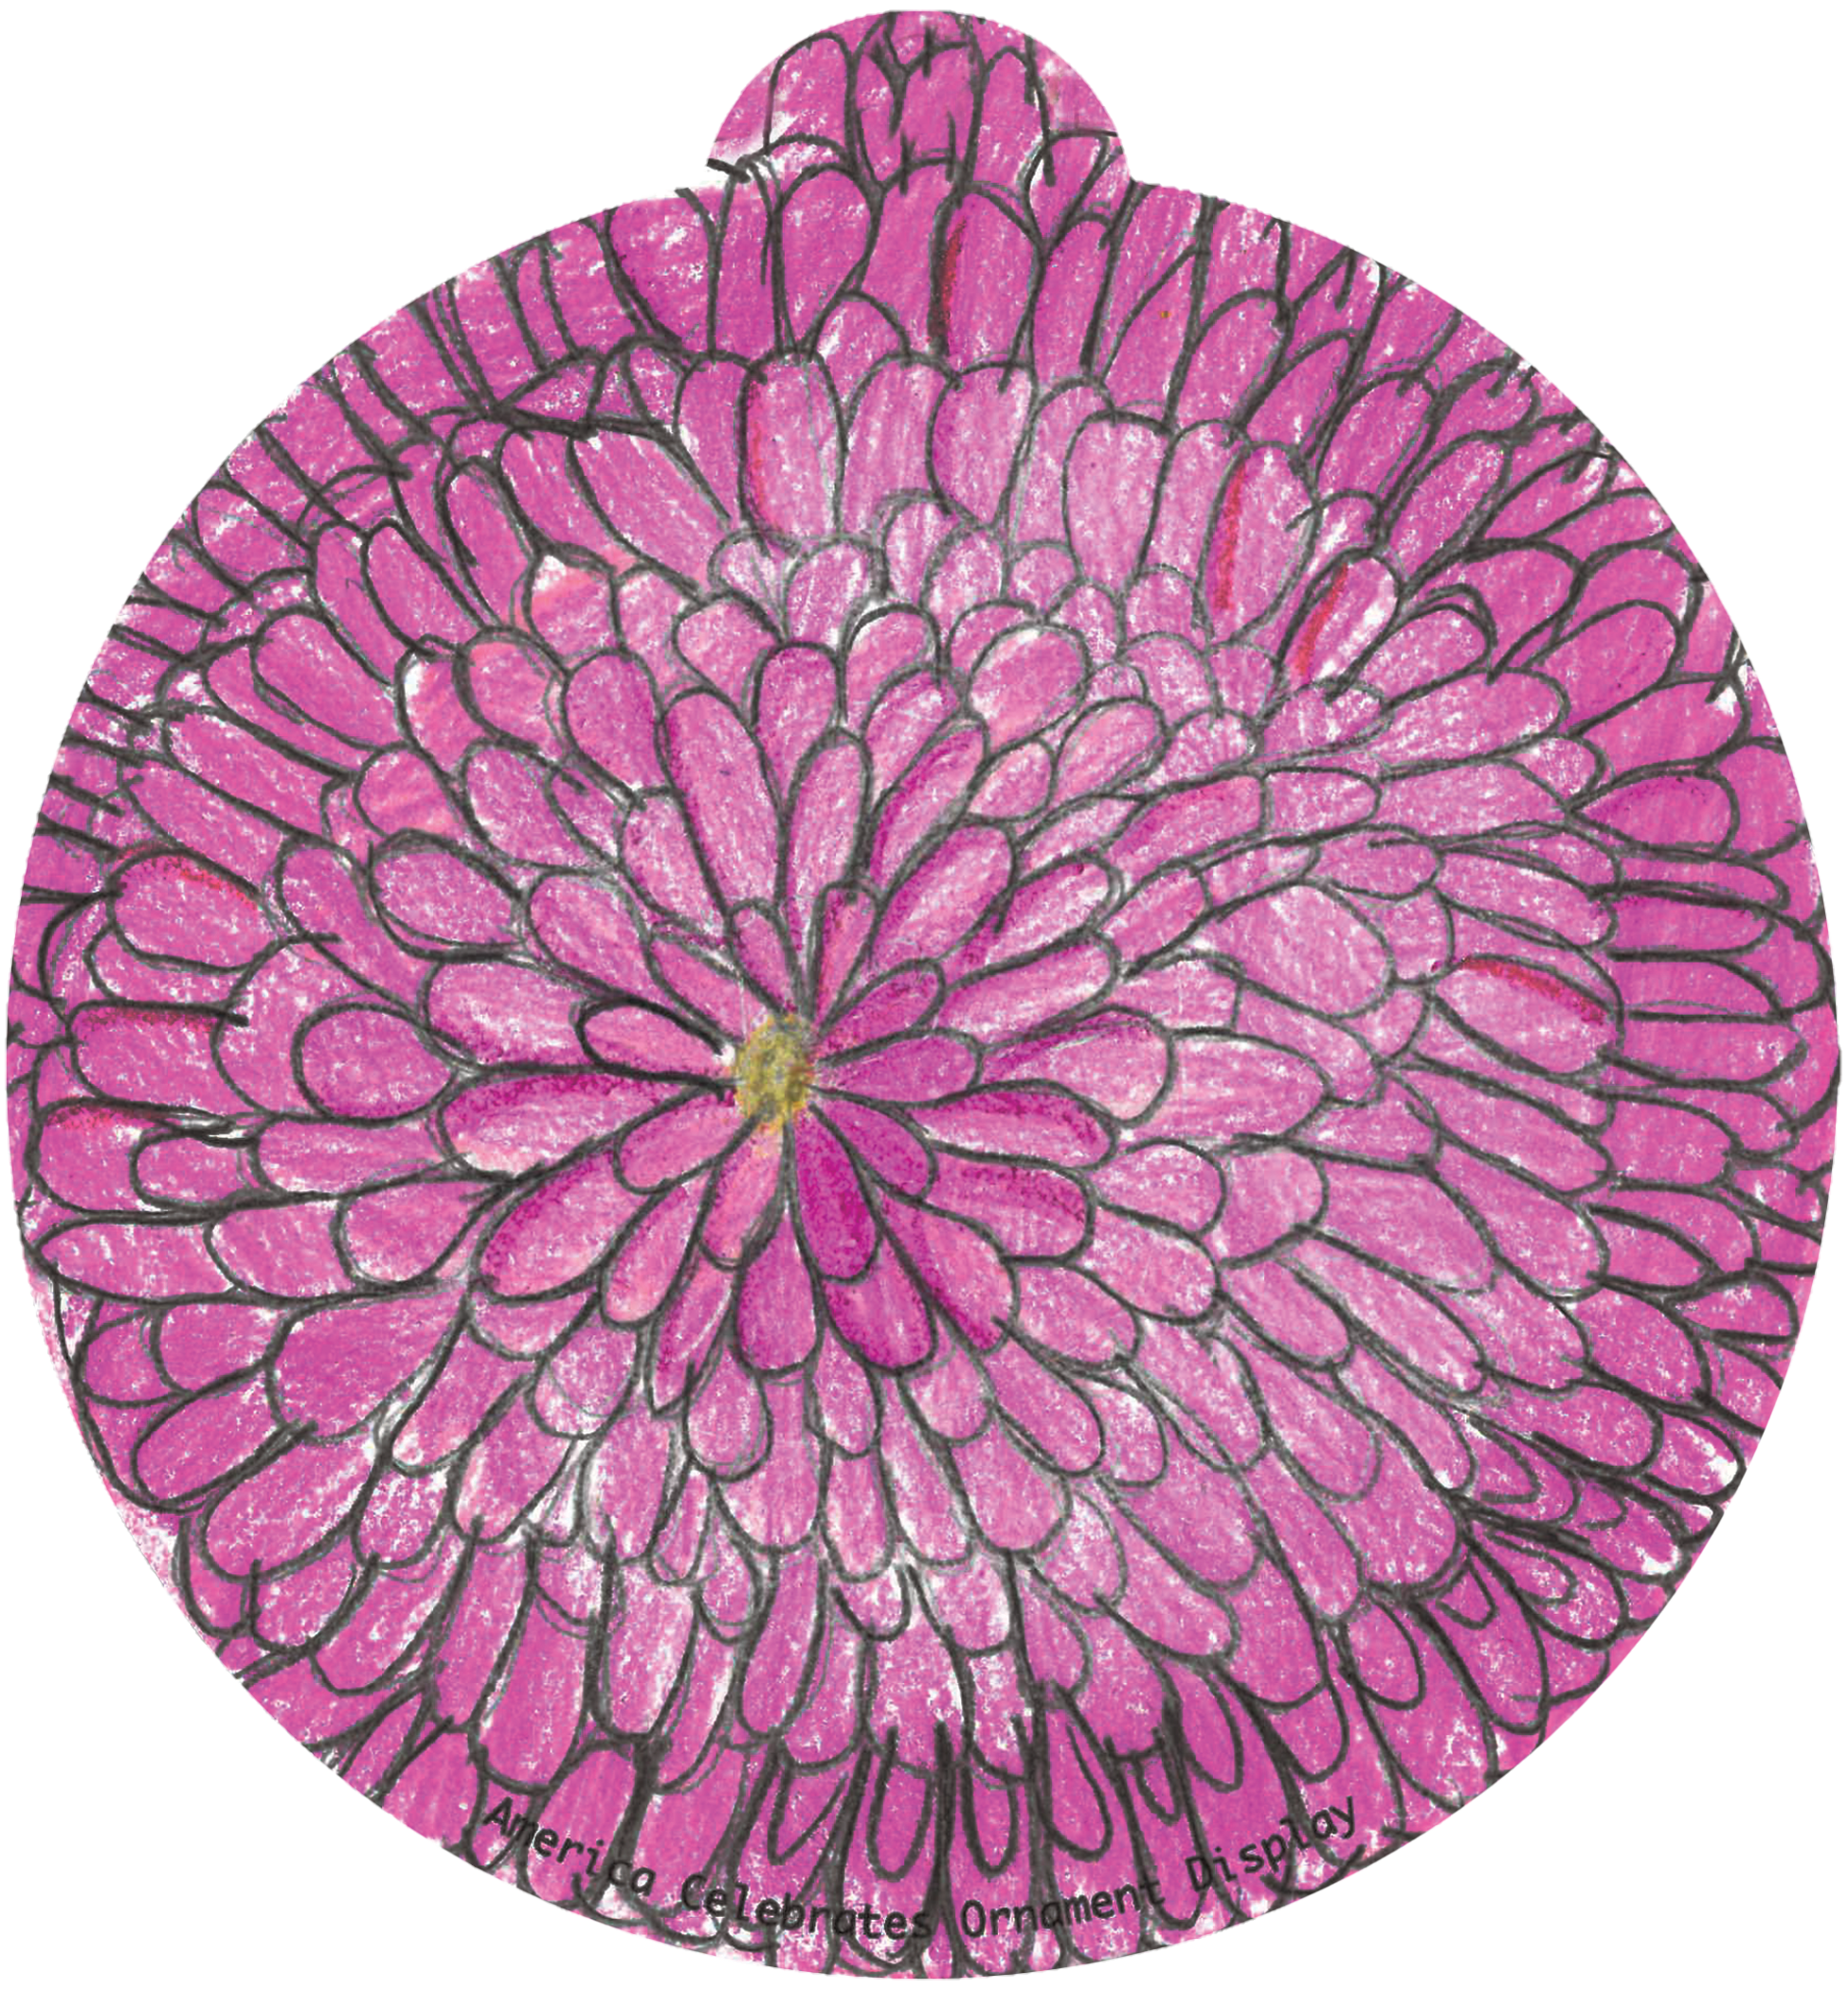 ornament depicting a pink chrysanthemum flower